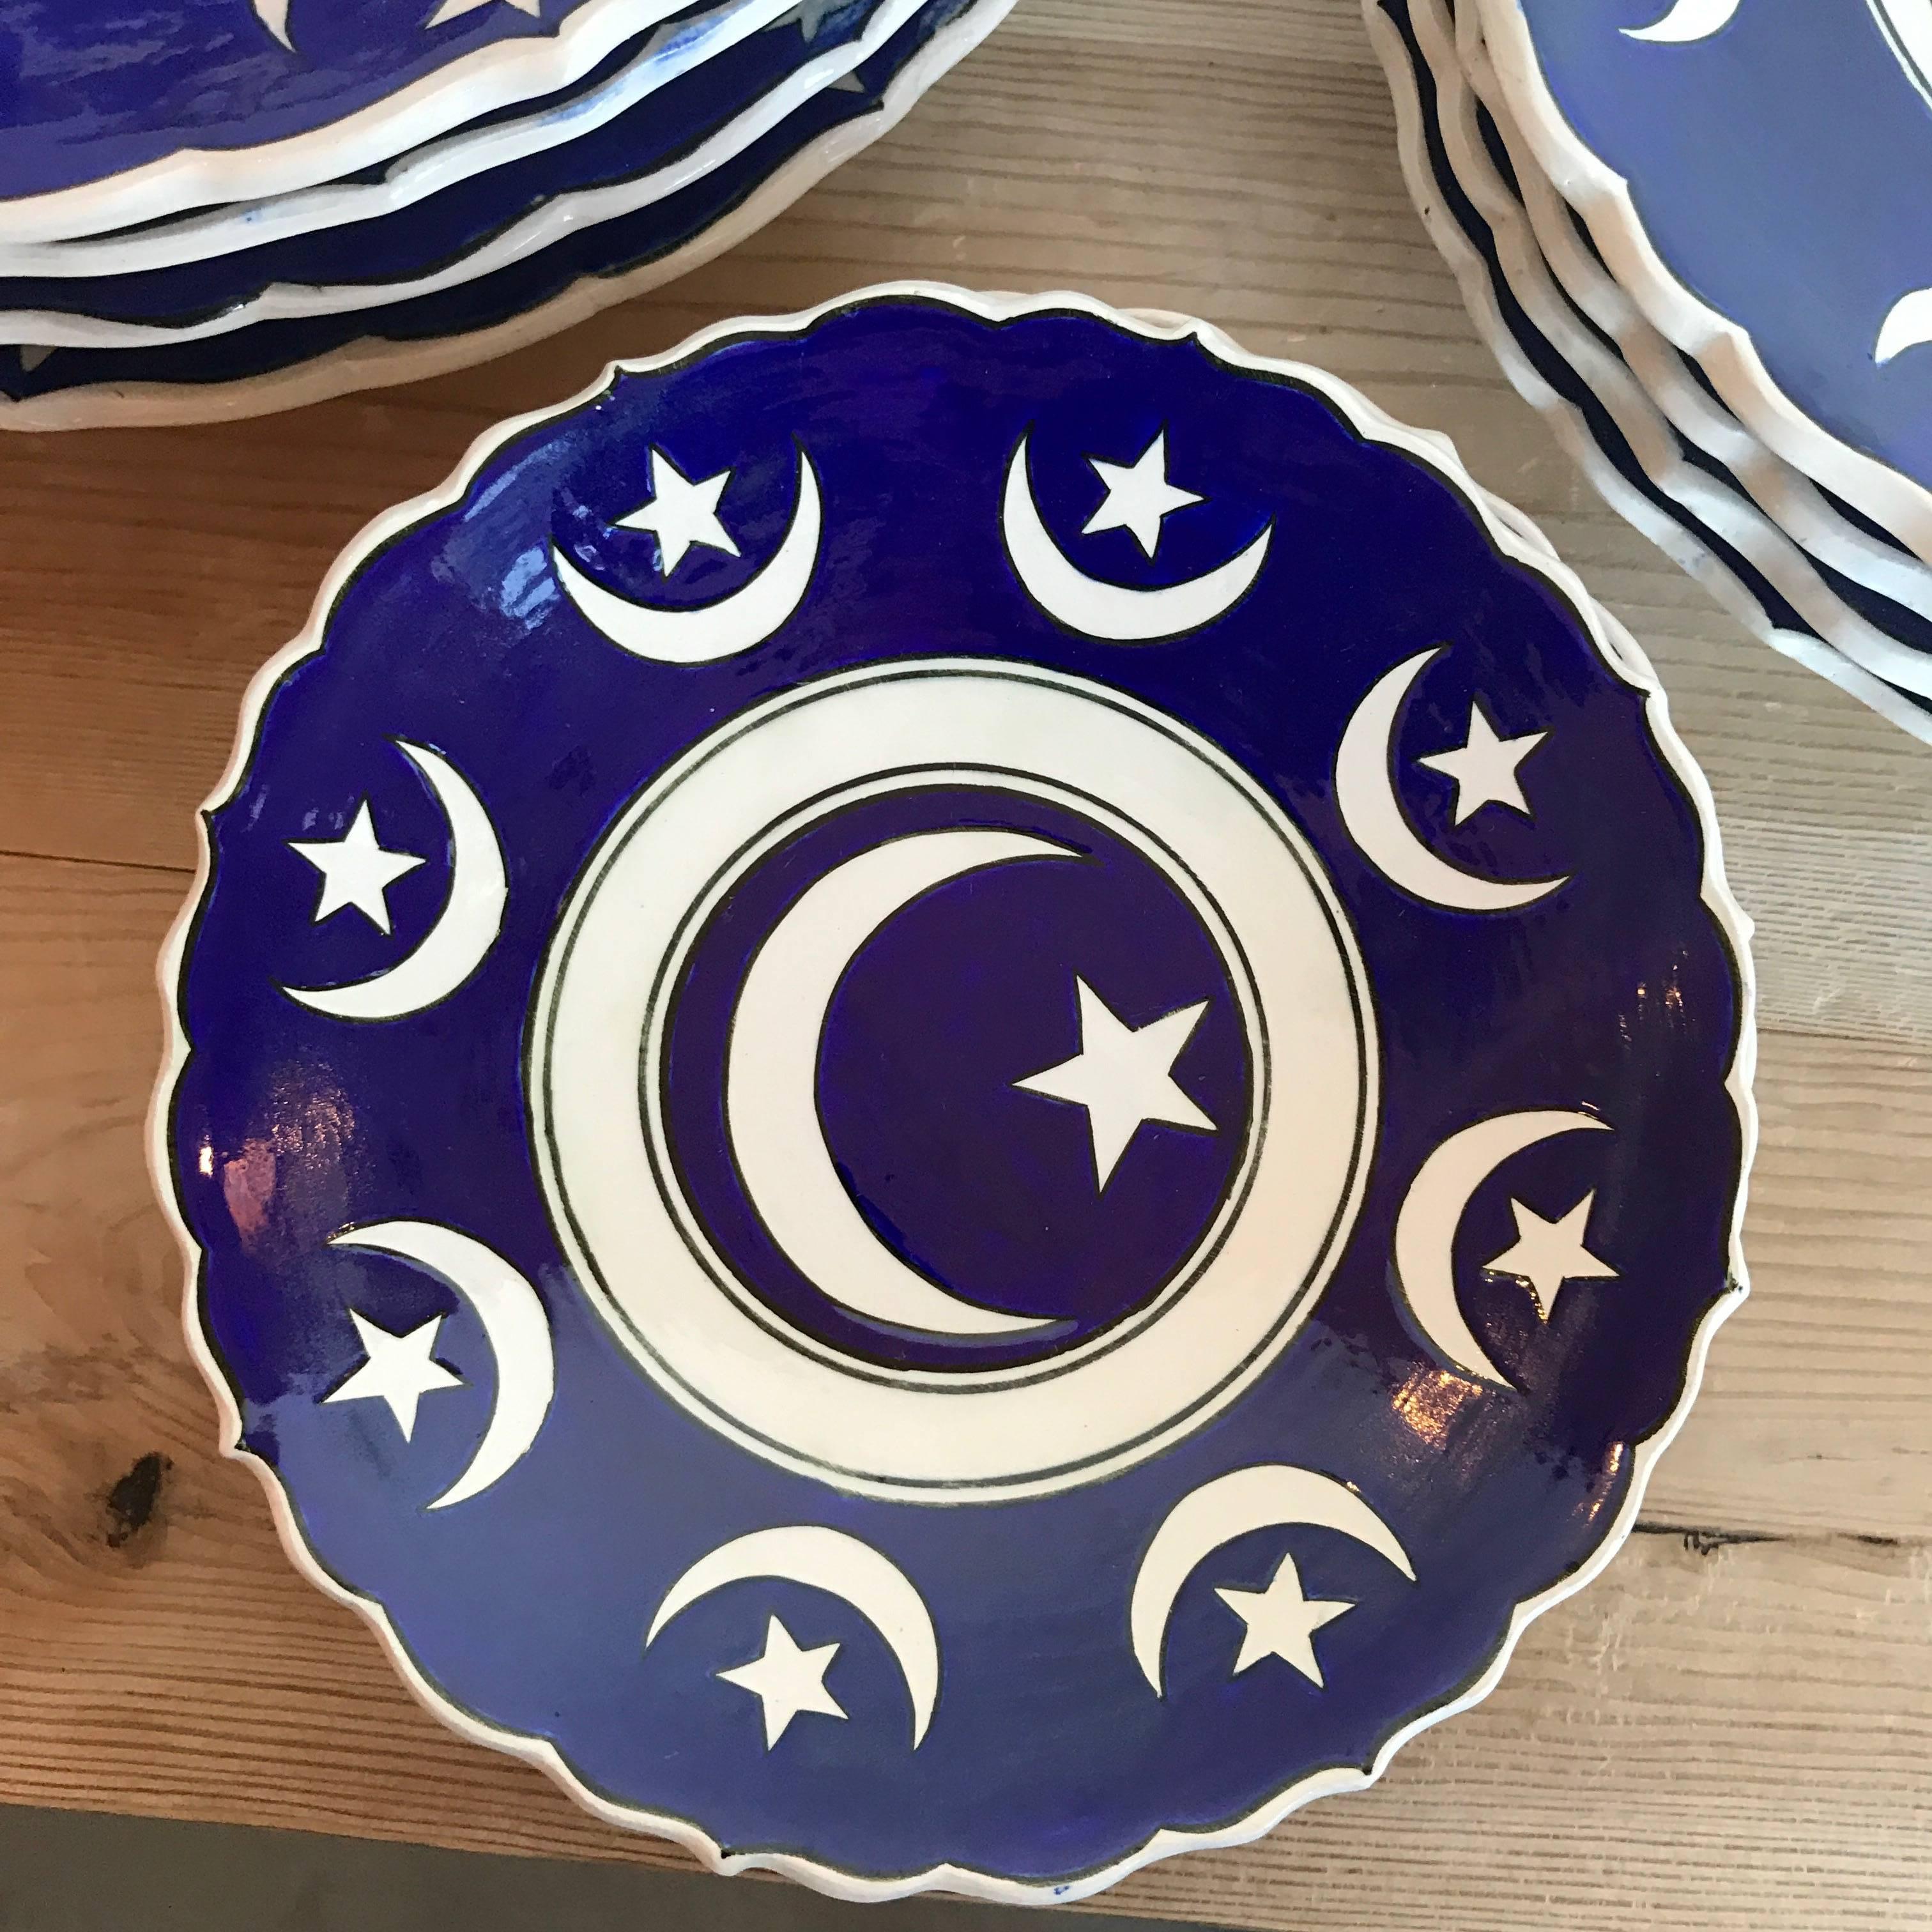 20th Century Set of 12 Hand-Painted Turkish Plates